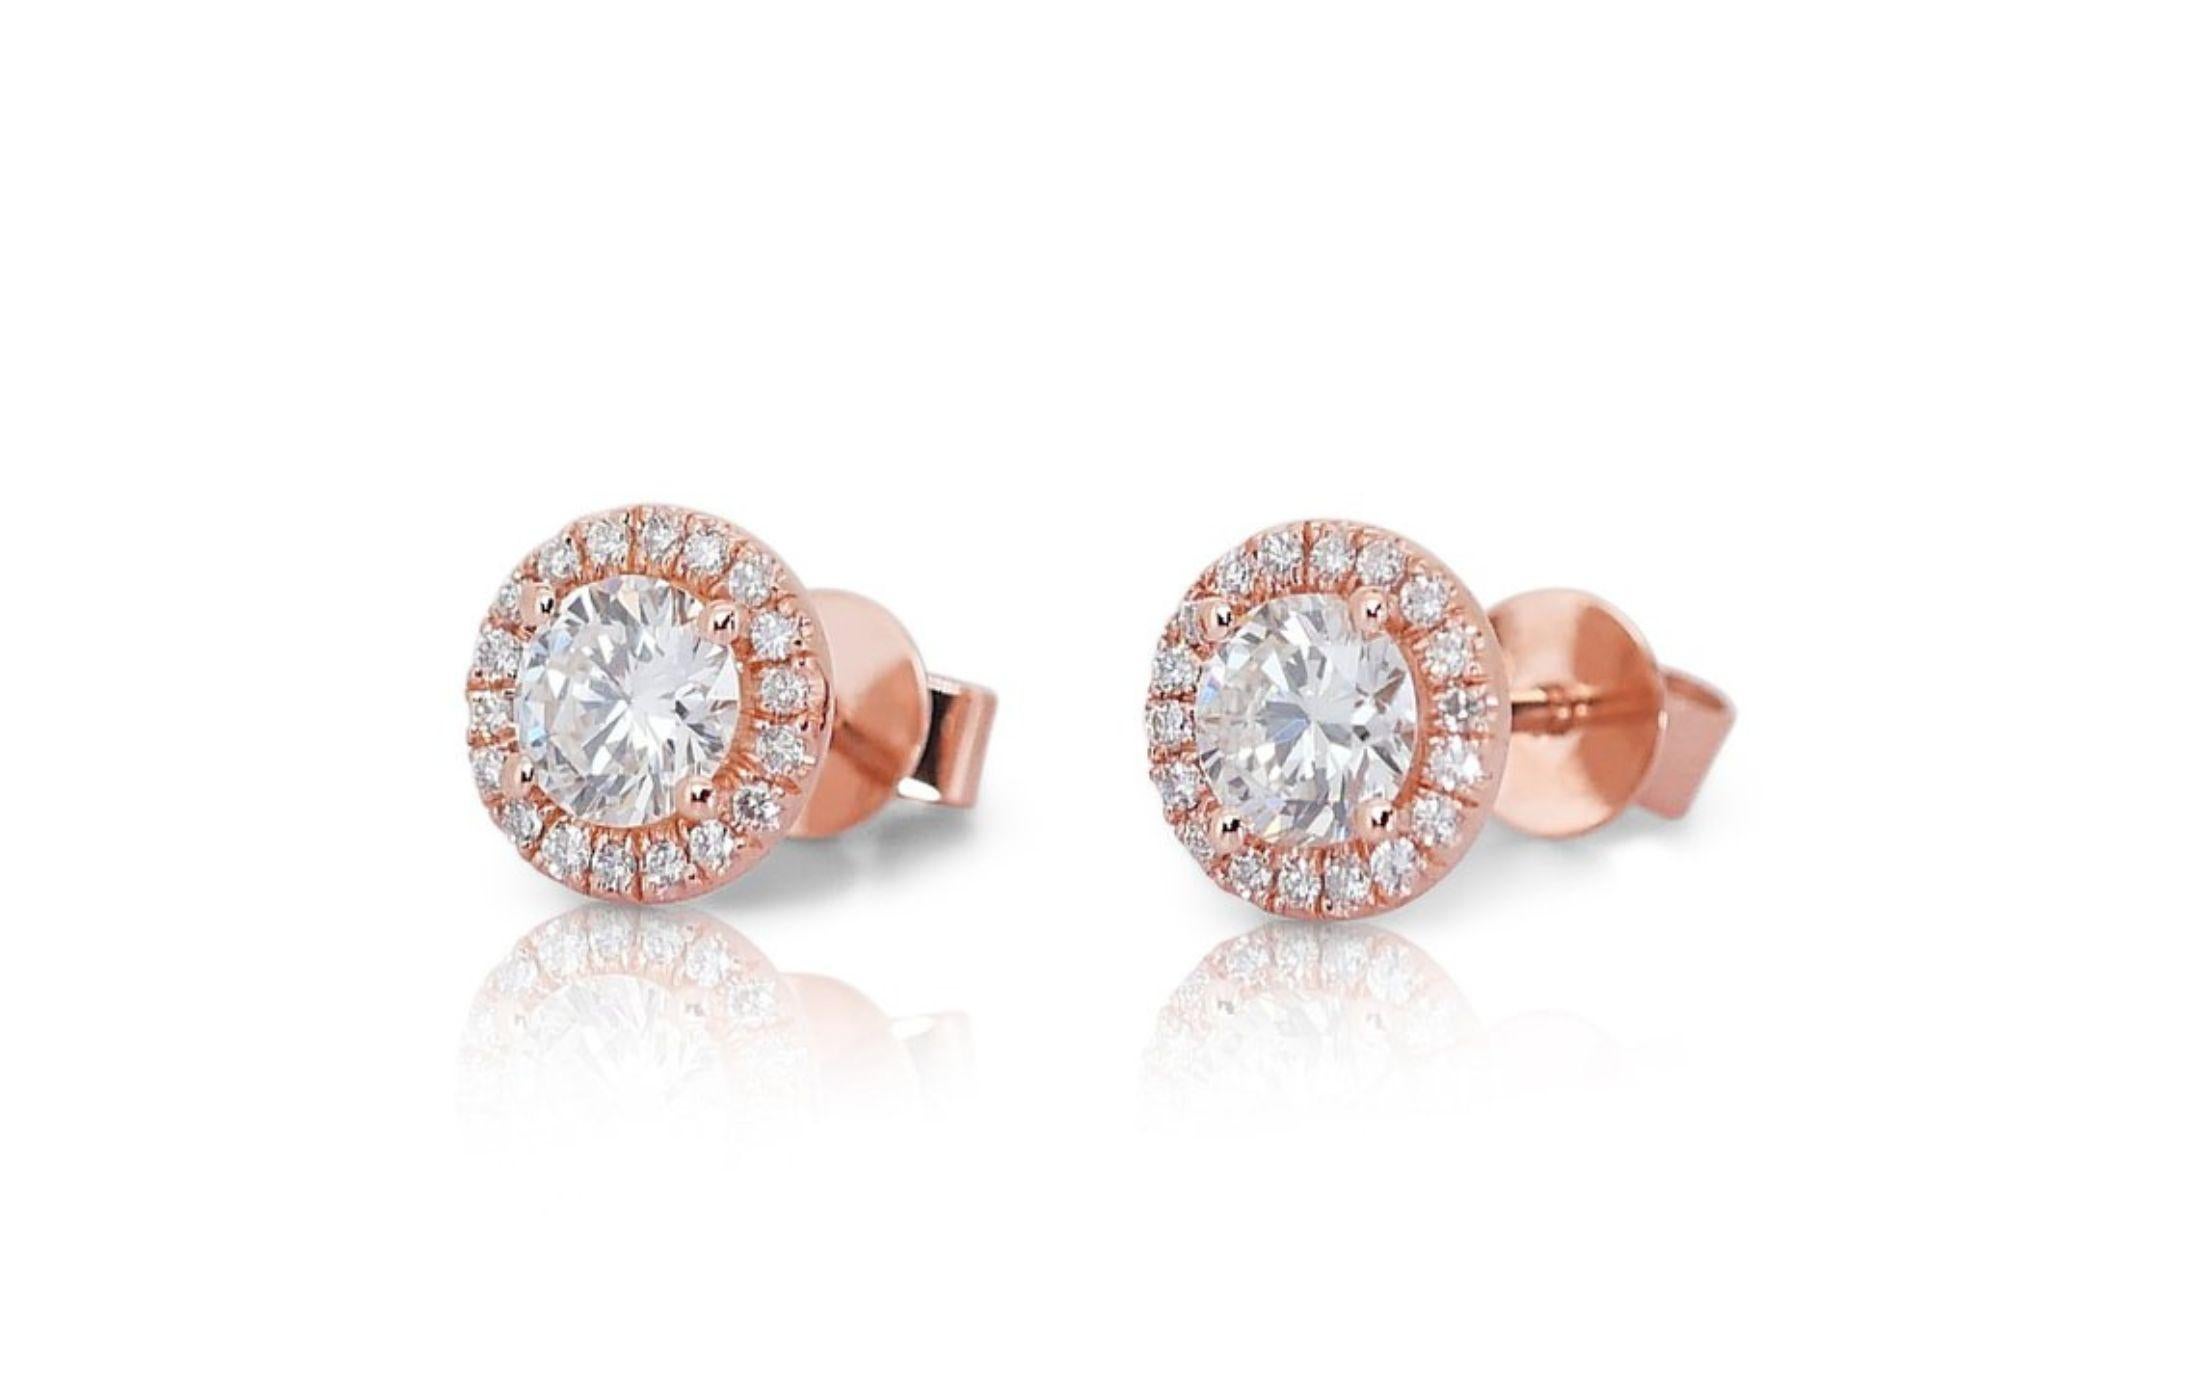 Round Cut Stunning Diamond Earrings with 1.2 carat Round Brilliant Diamond For Sale